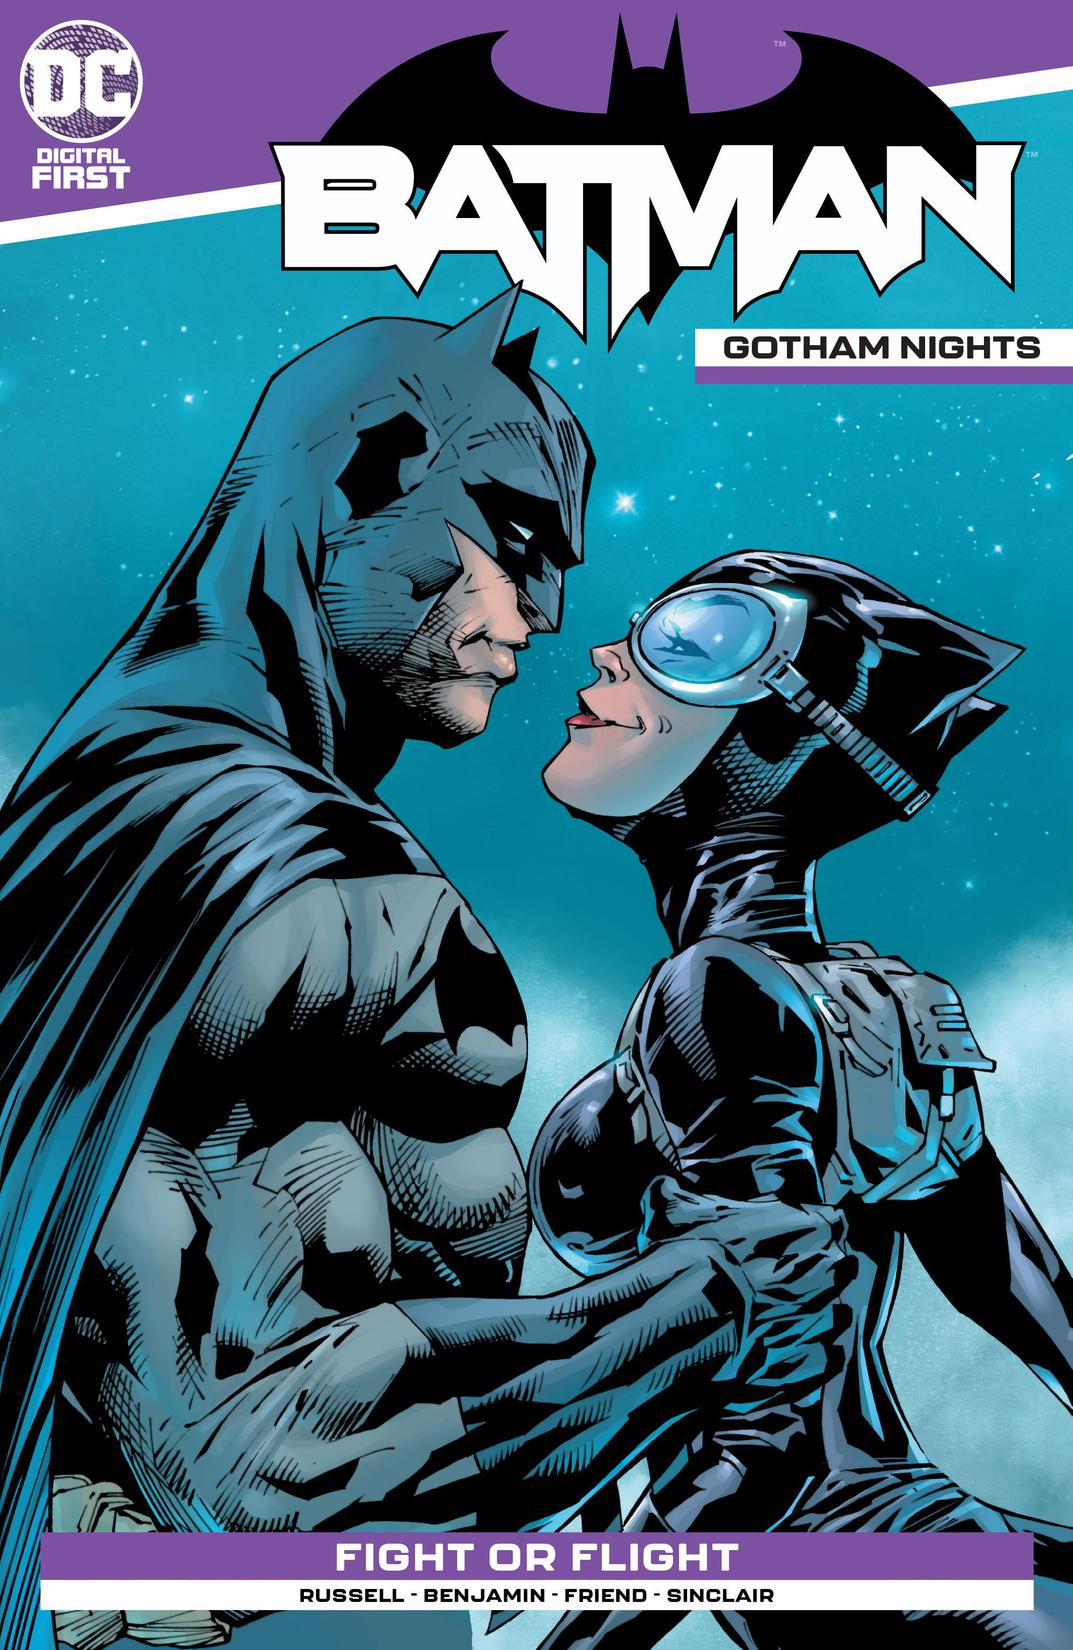 Batman: Gotham Nights #15 preview images